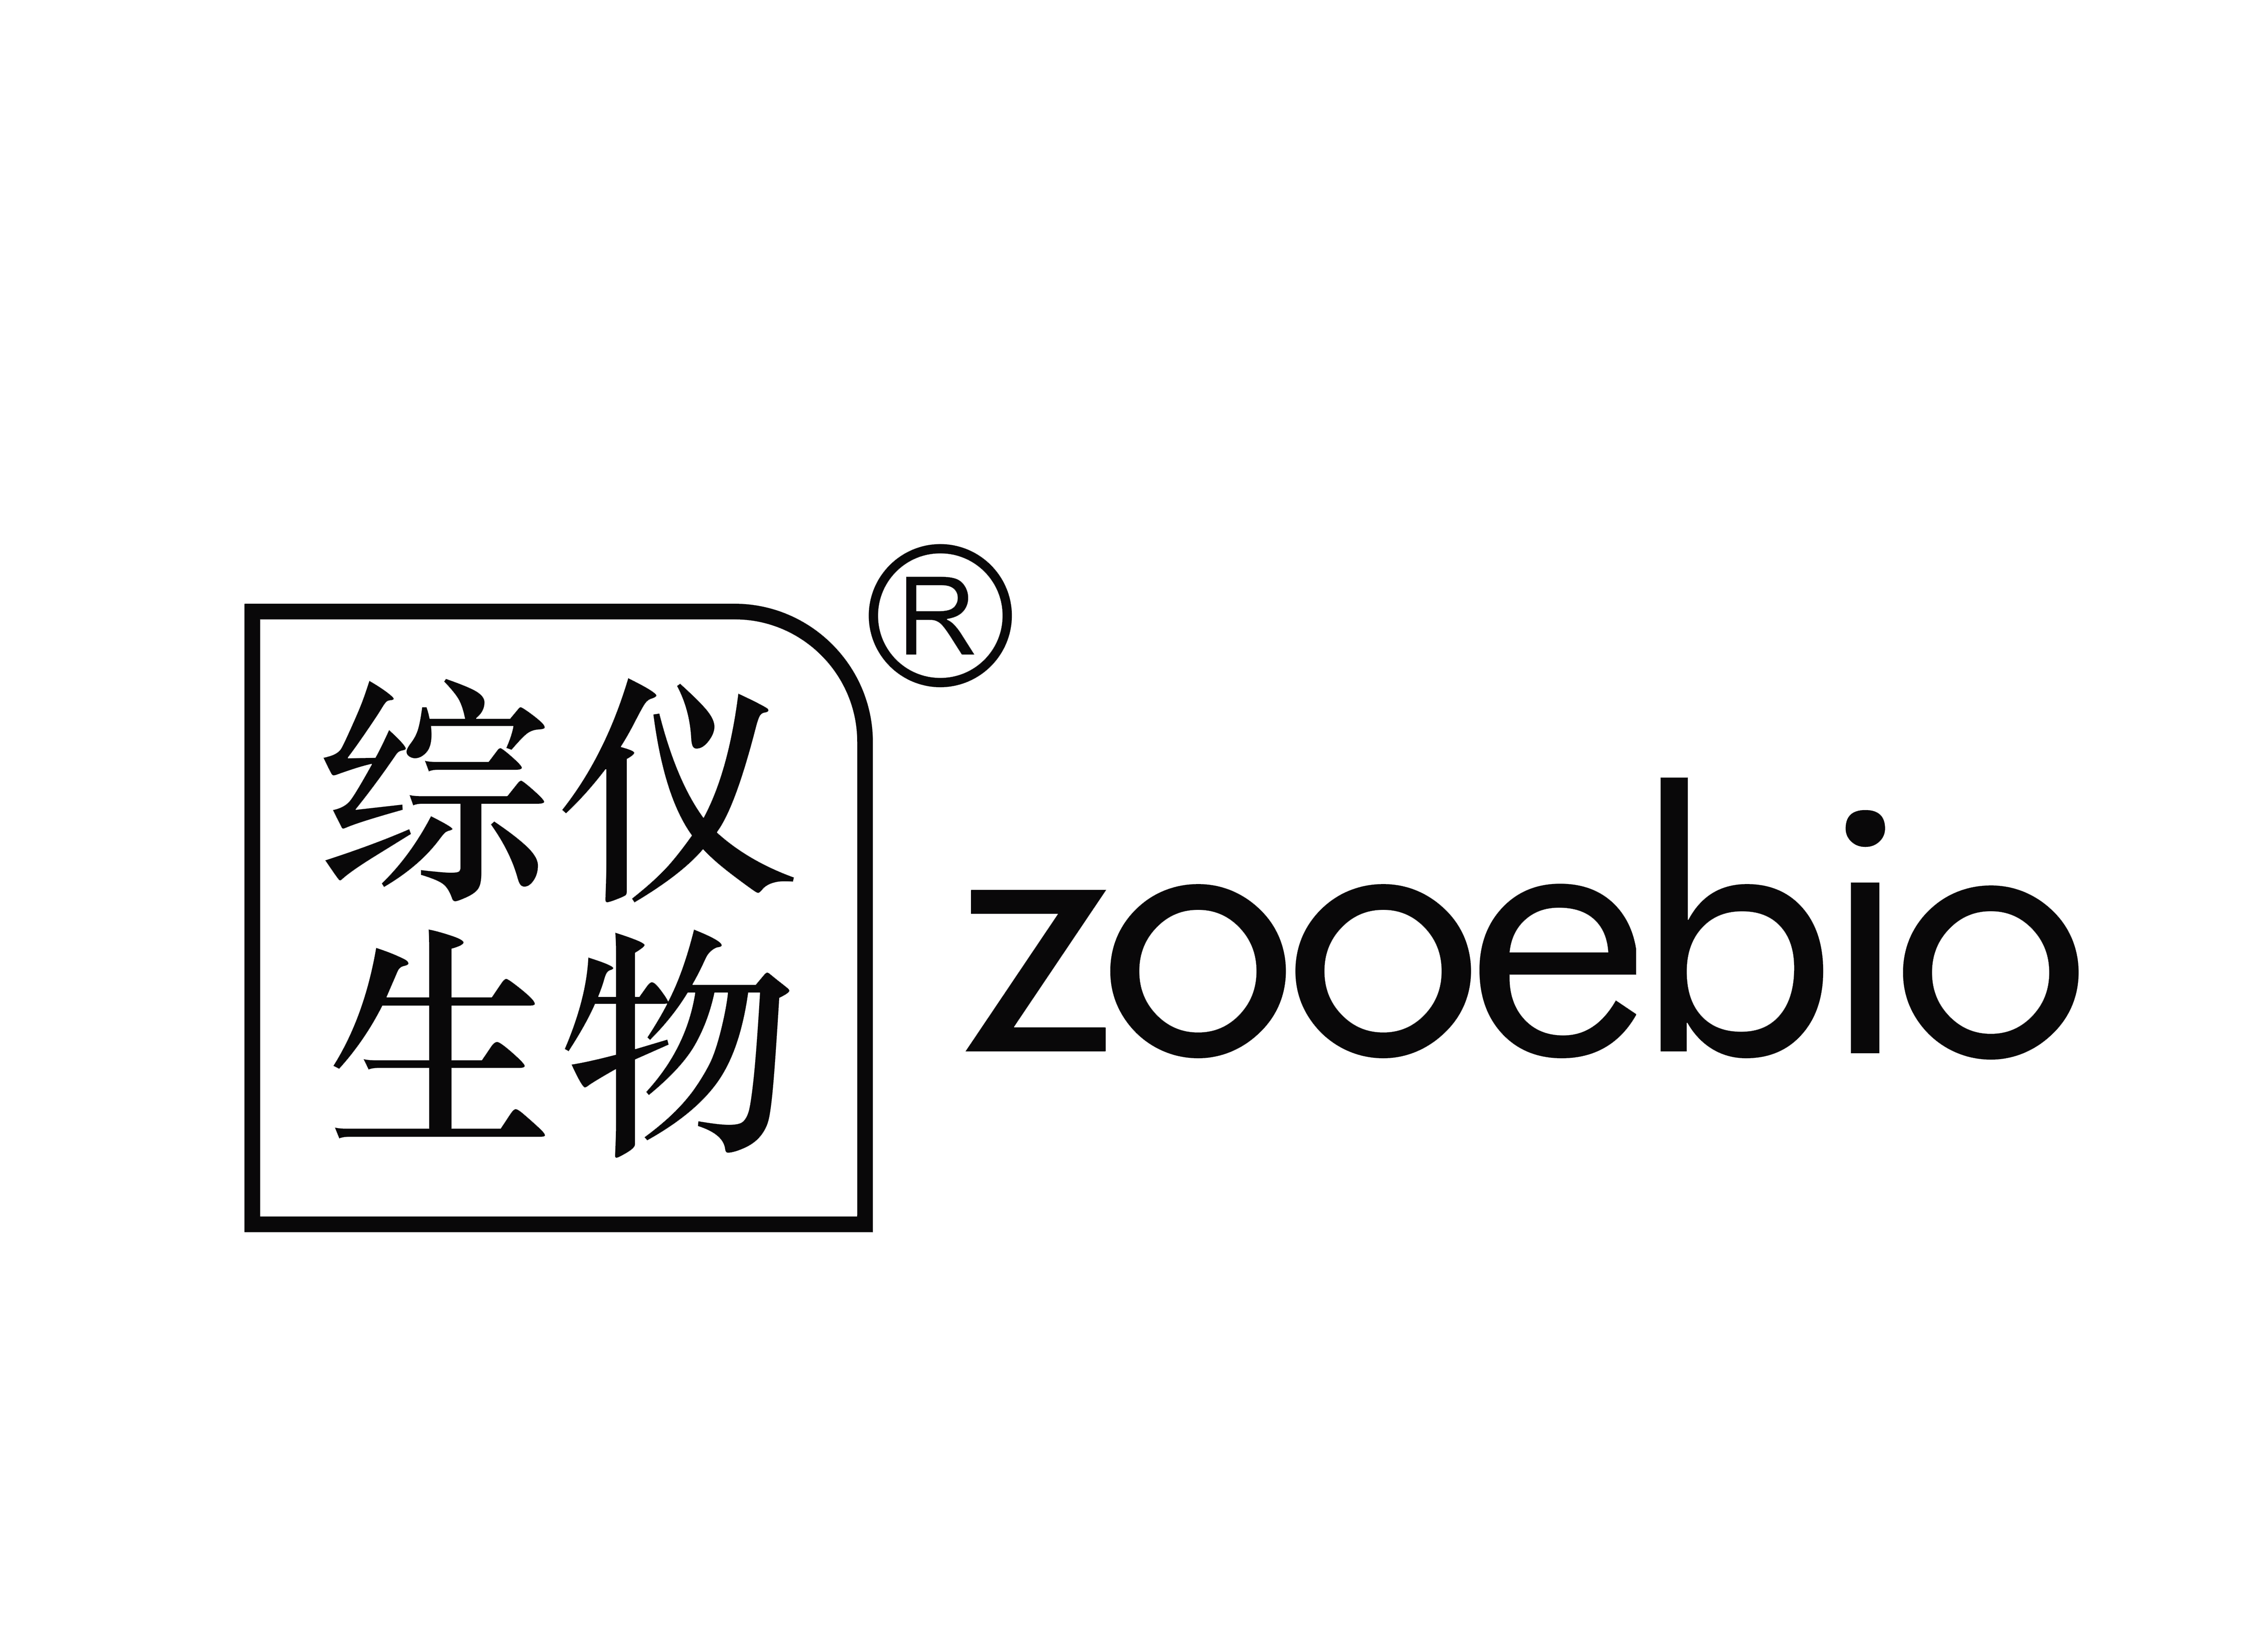 ChangSha Zooelab Biotechnology Co., Ltd